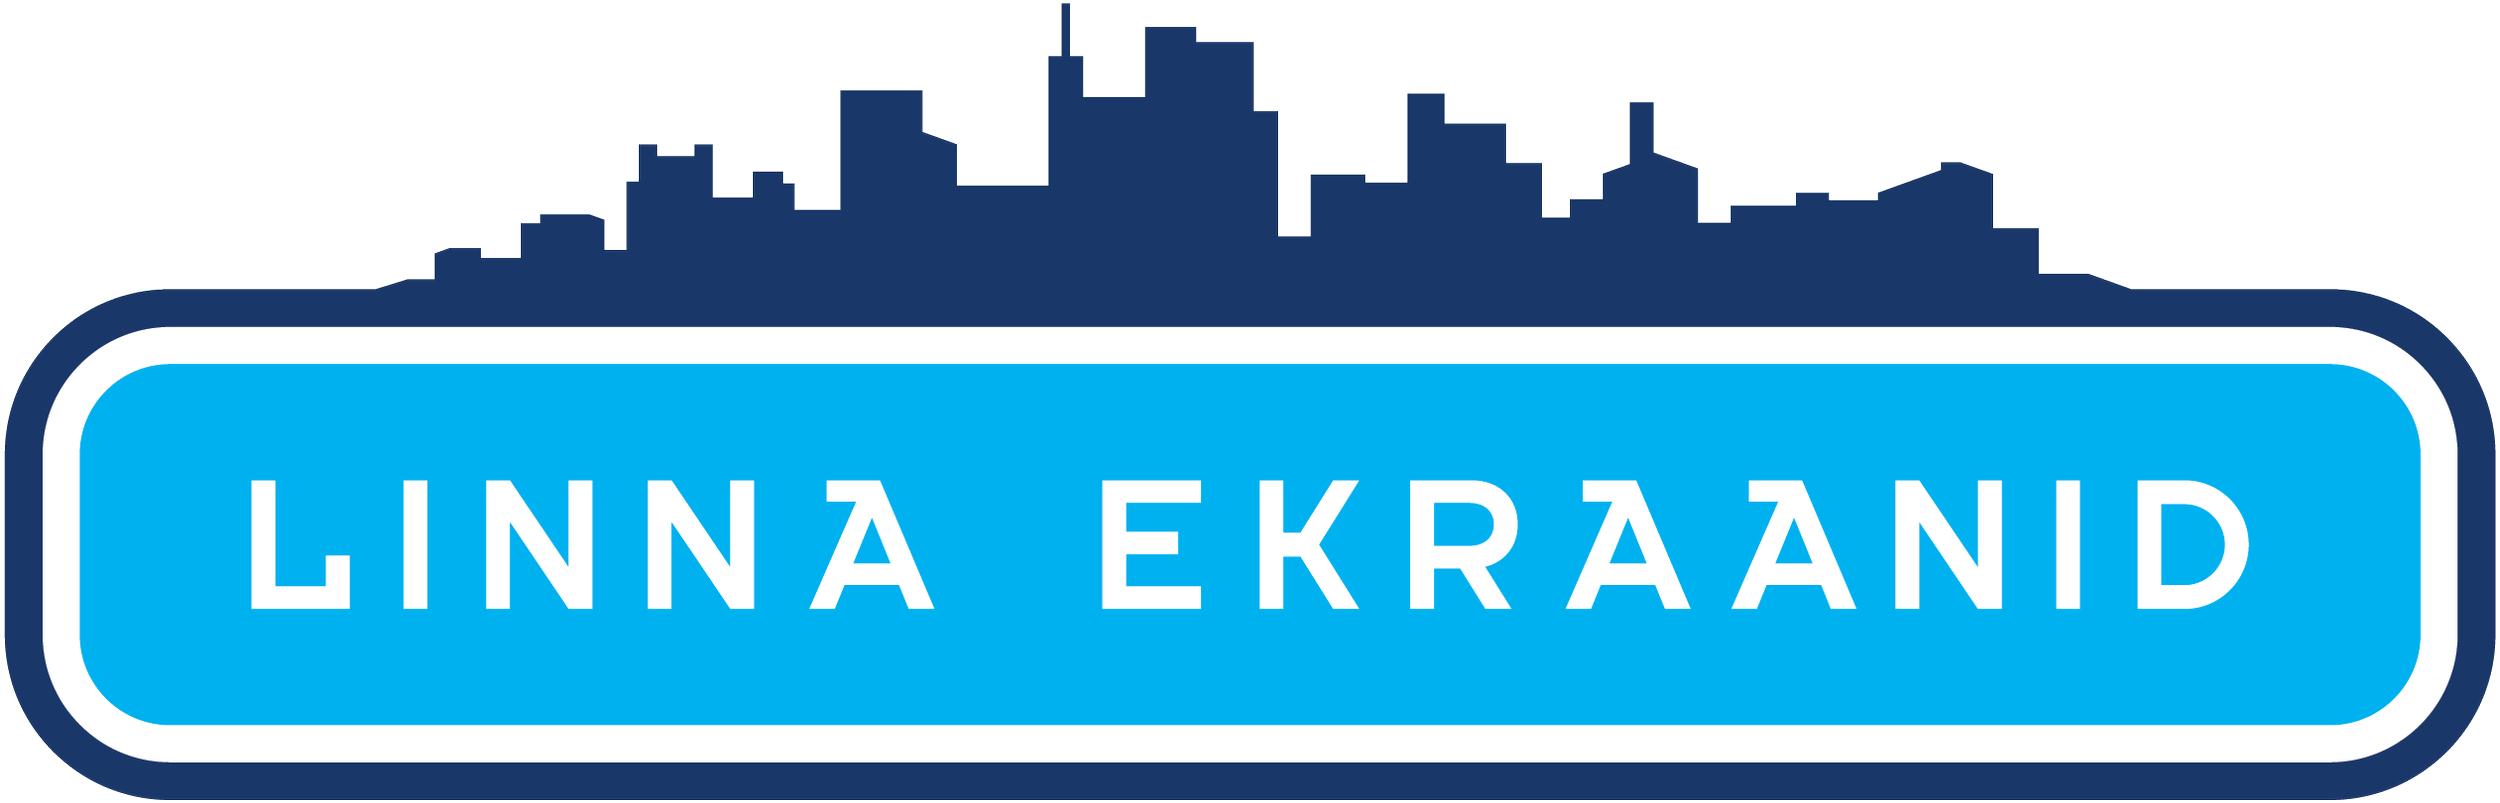 LinnaEkraanid_logo.png